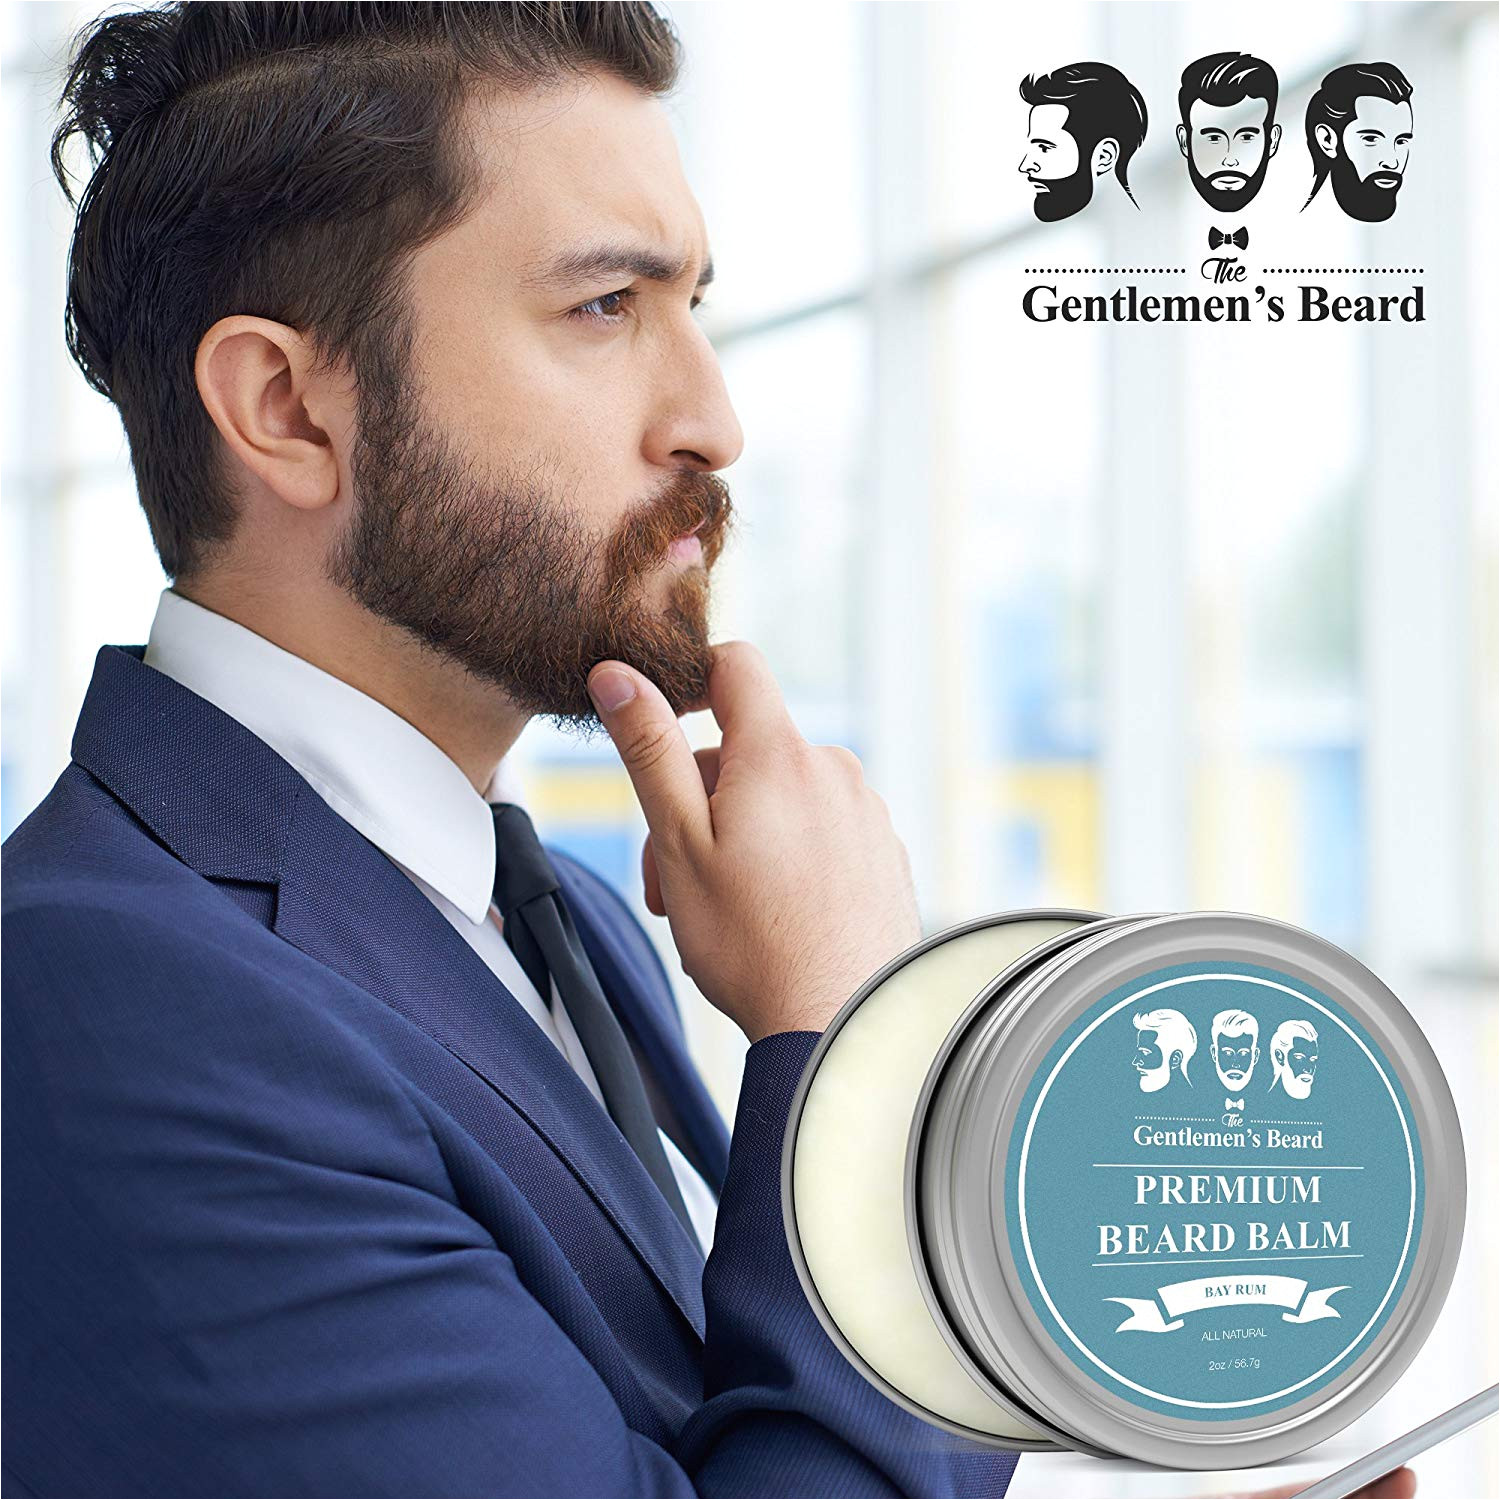 amazon com the gentlemen s beard premium beard balm leave in conditioner softener bay rum 2oz health personal care